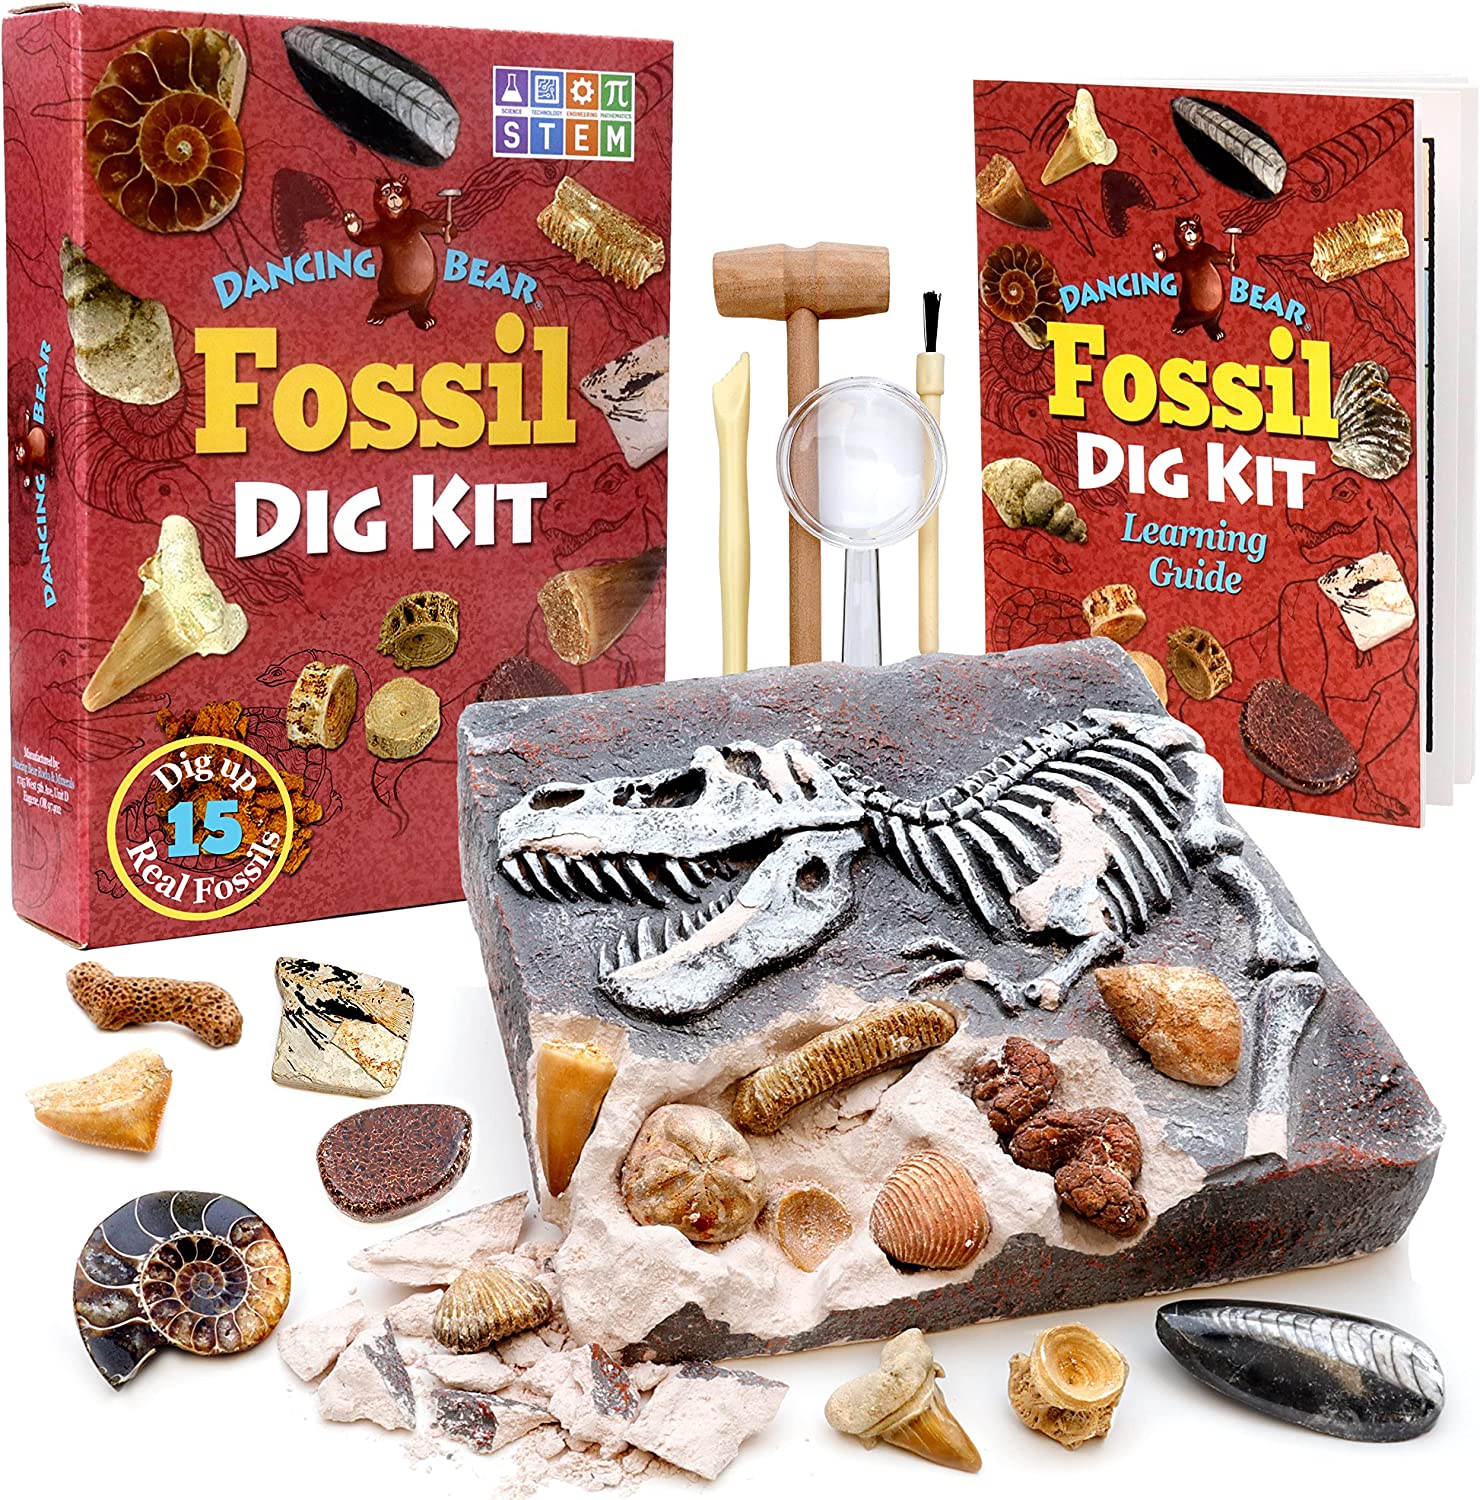 Kids Gold Dig Kit, Real Pyrite